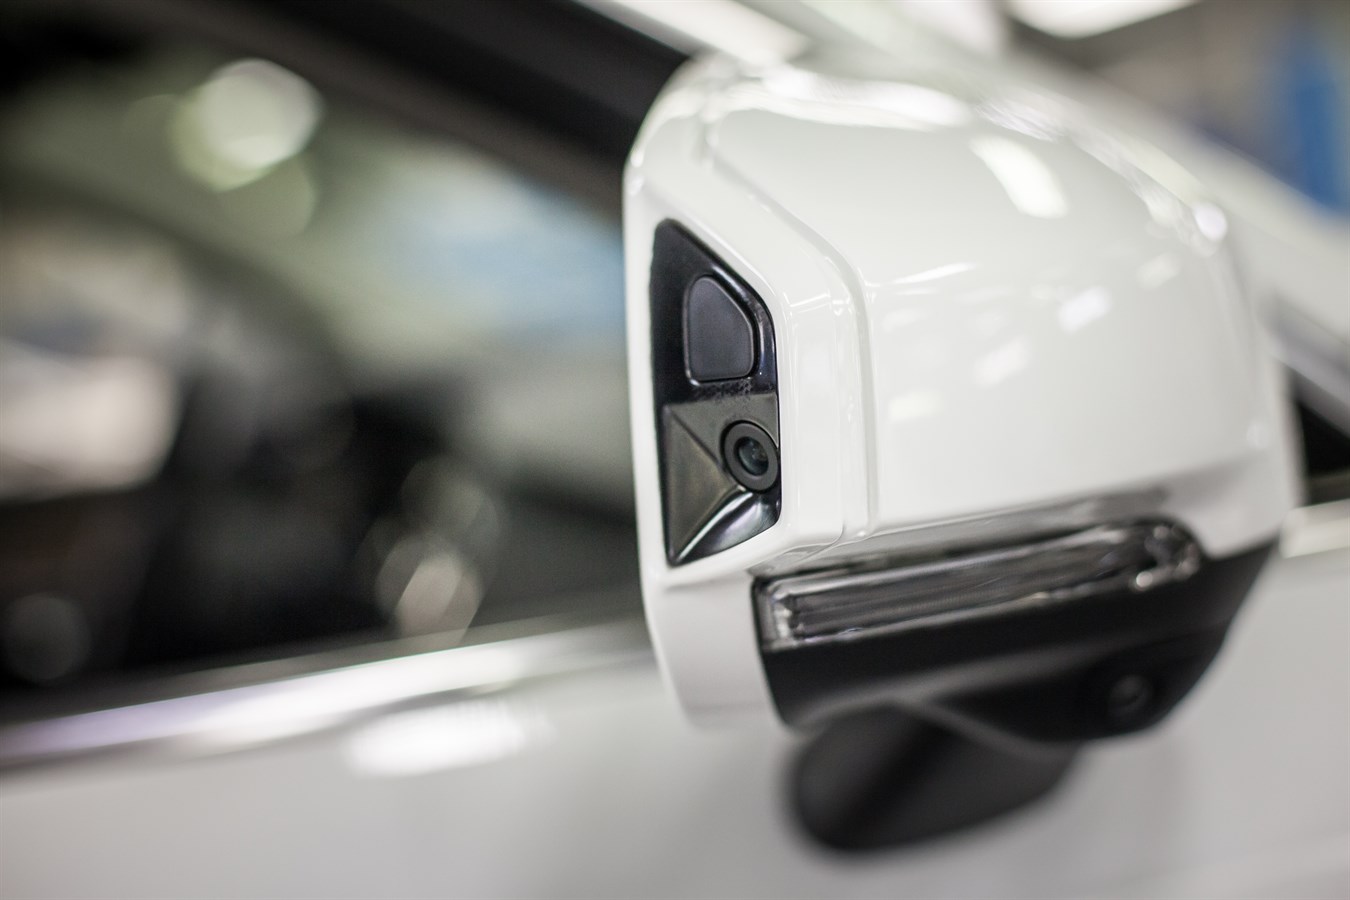 Volvo start ambitieus Drive Me-project